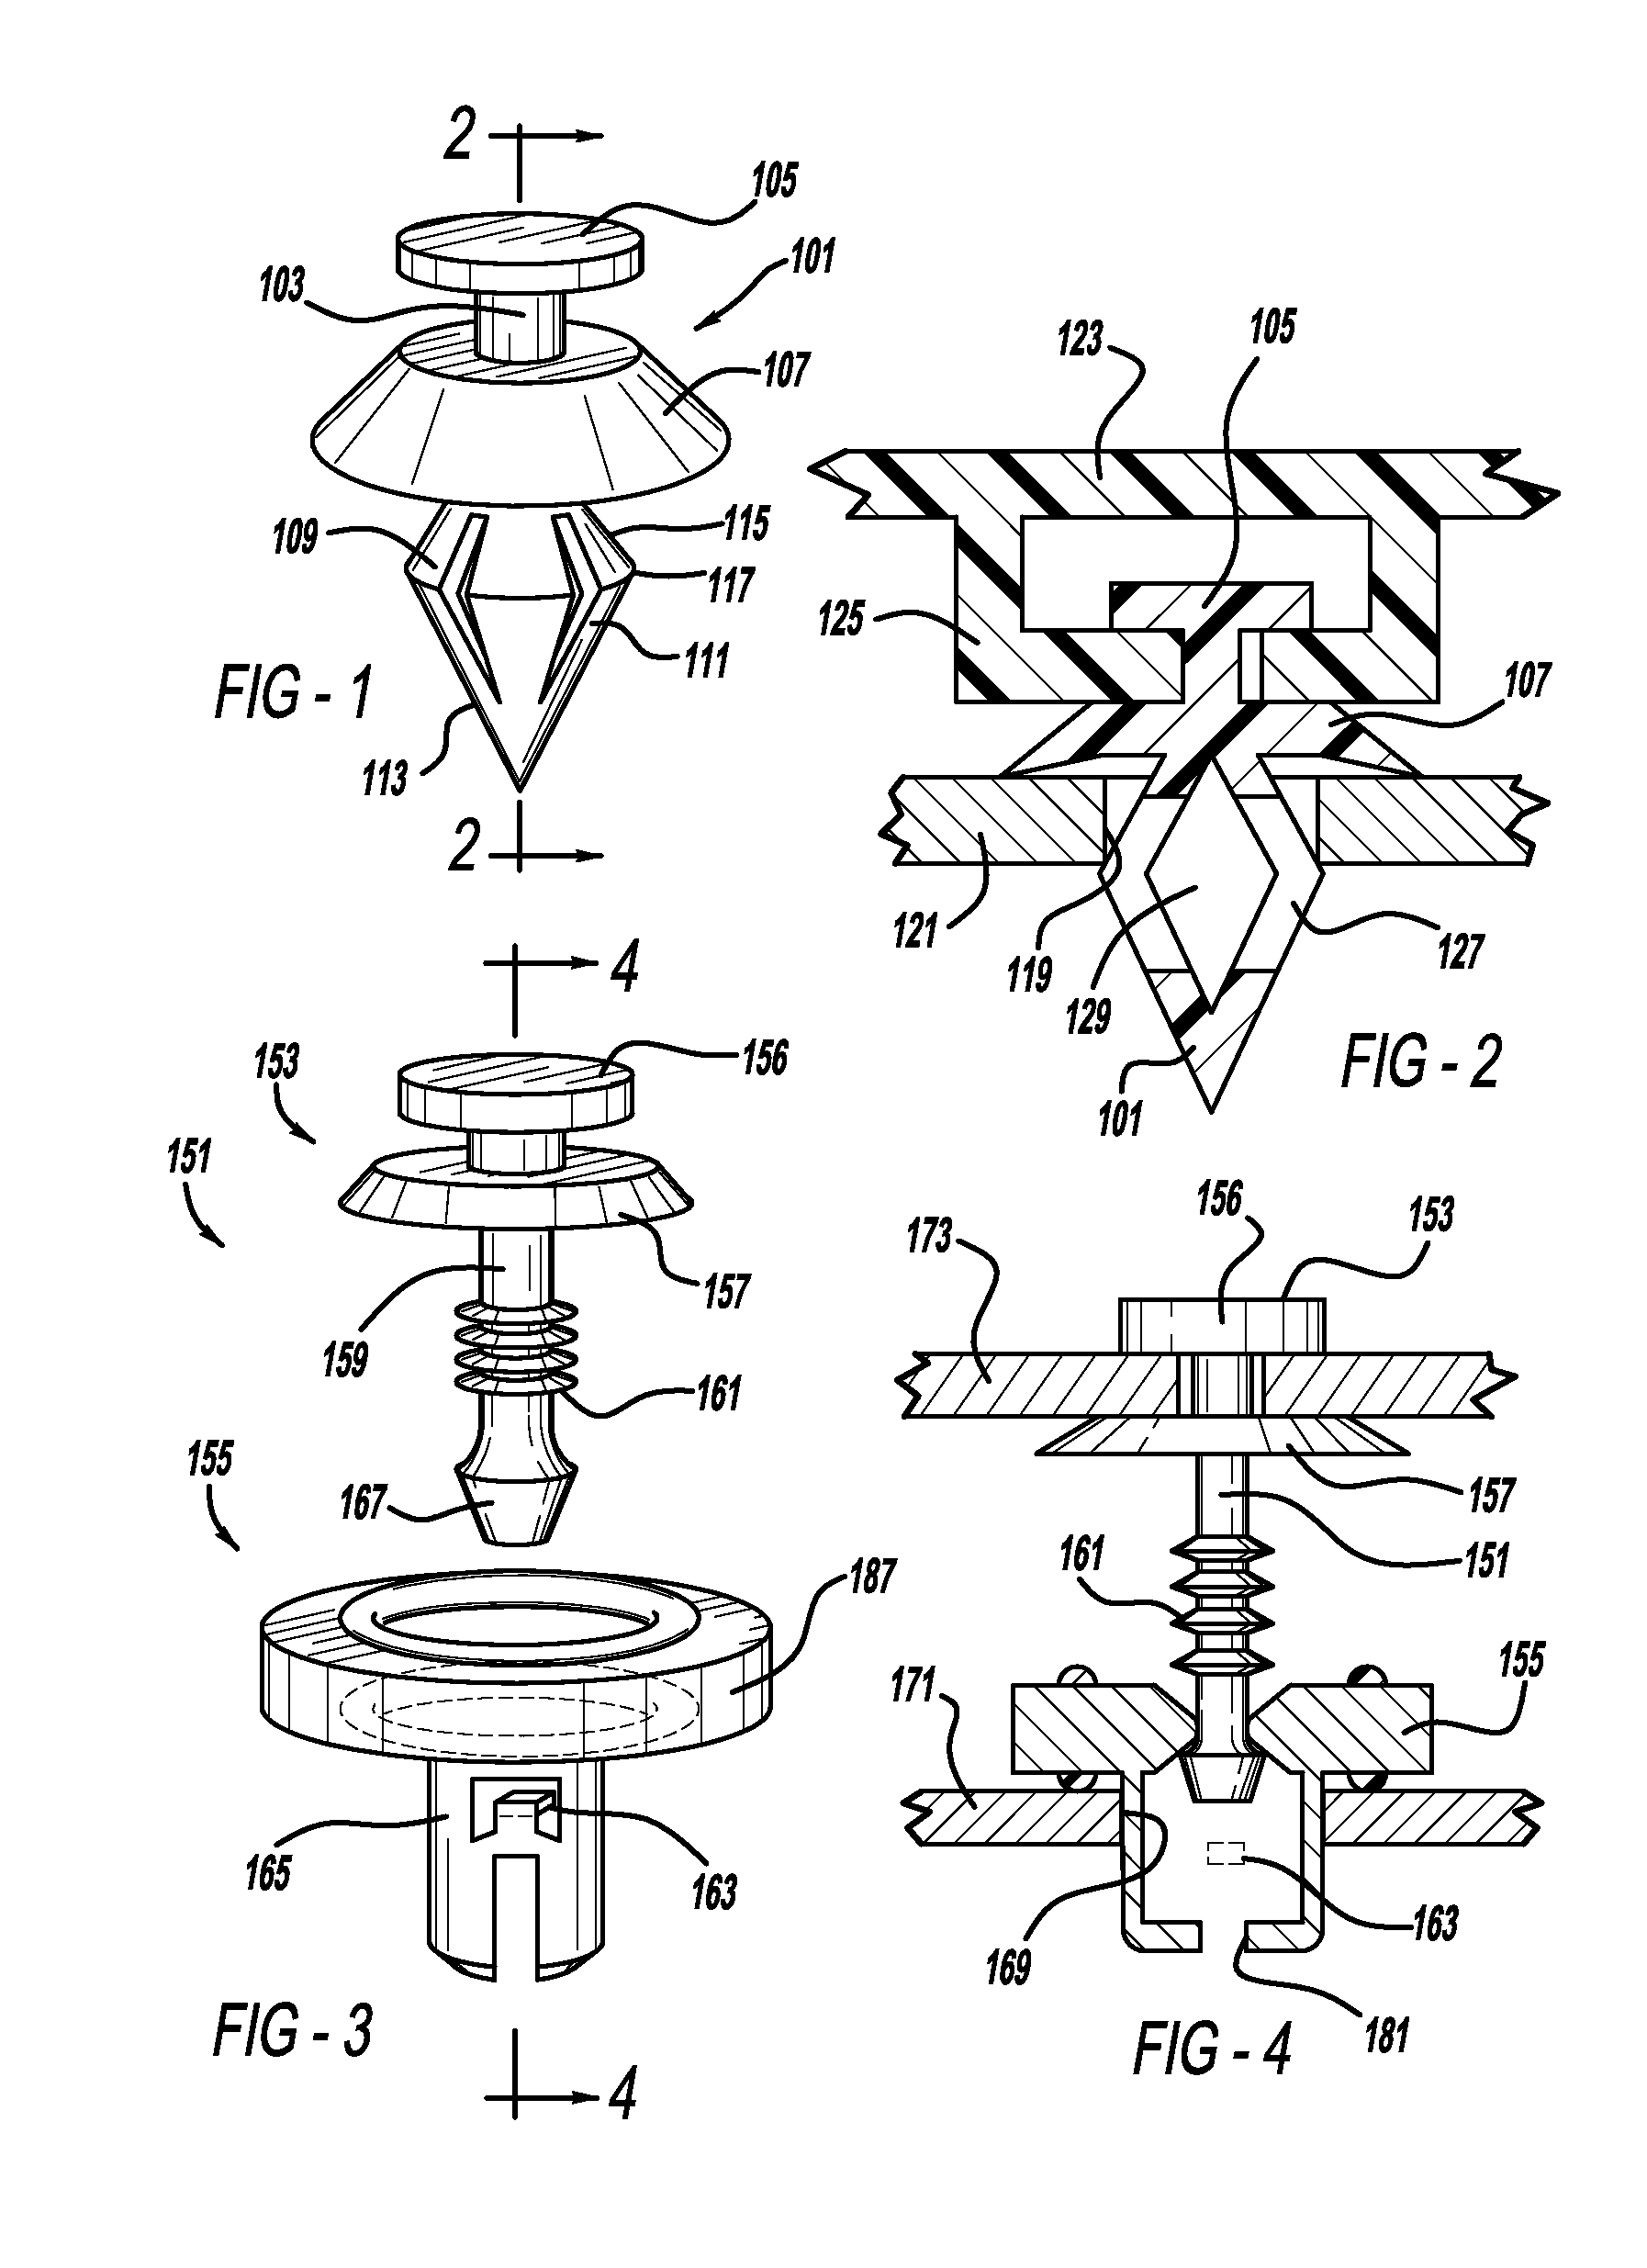 Method of making fasteners by three-dimensional printing